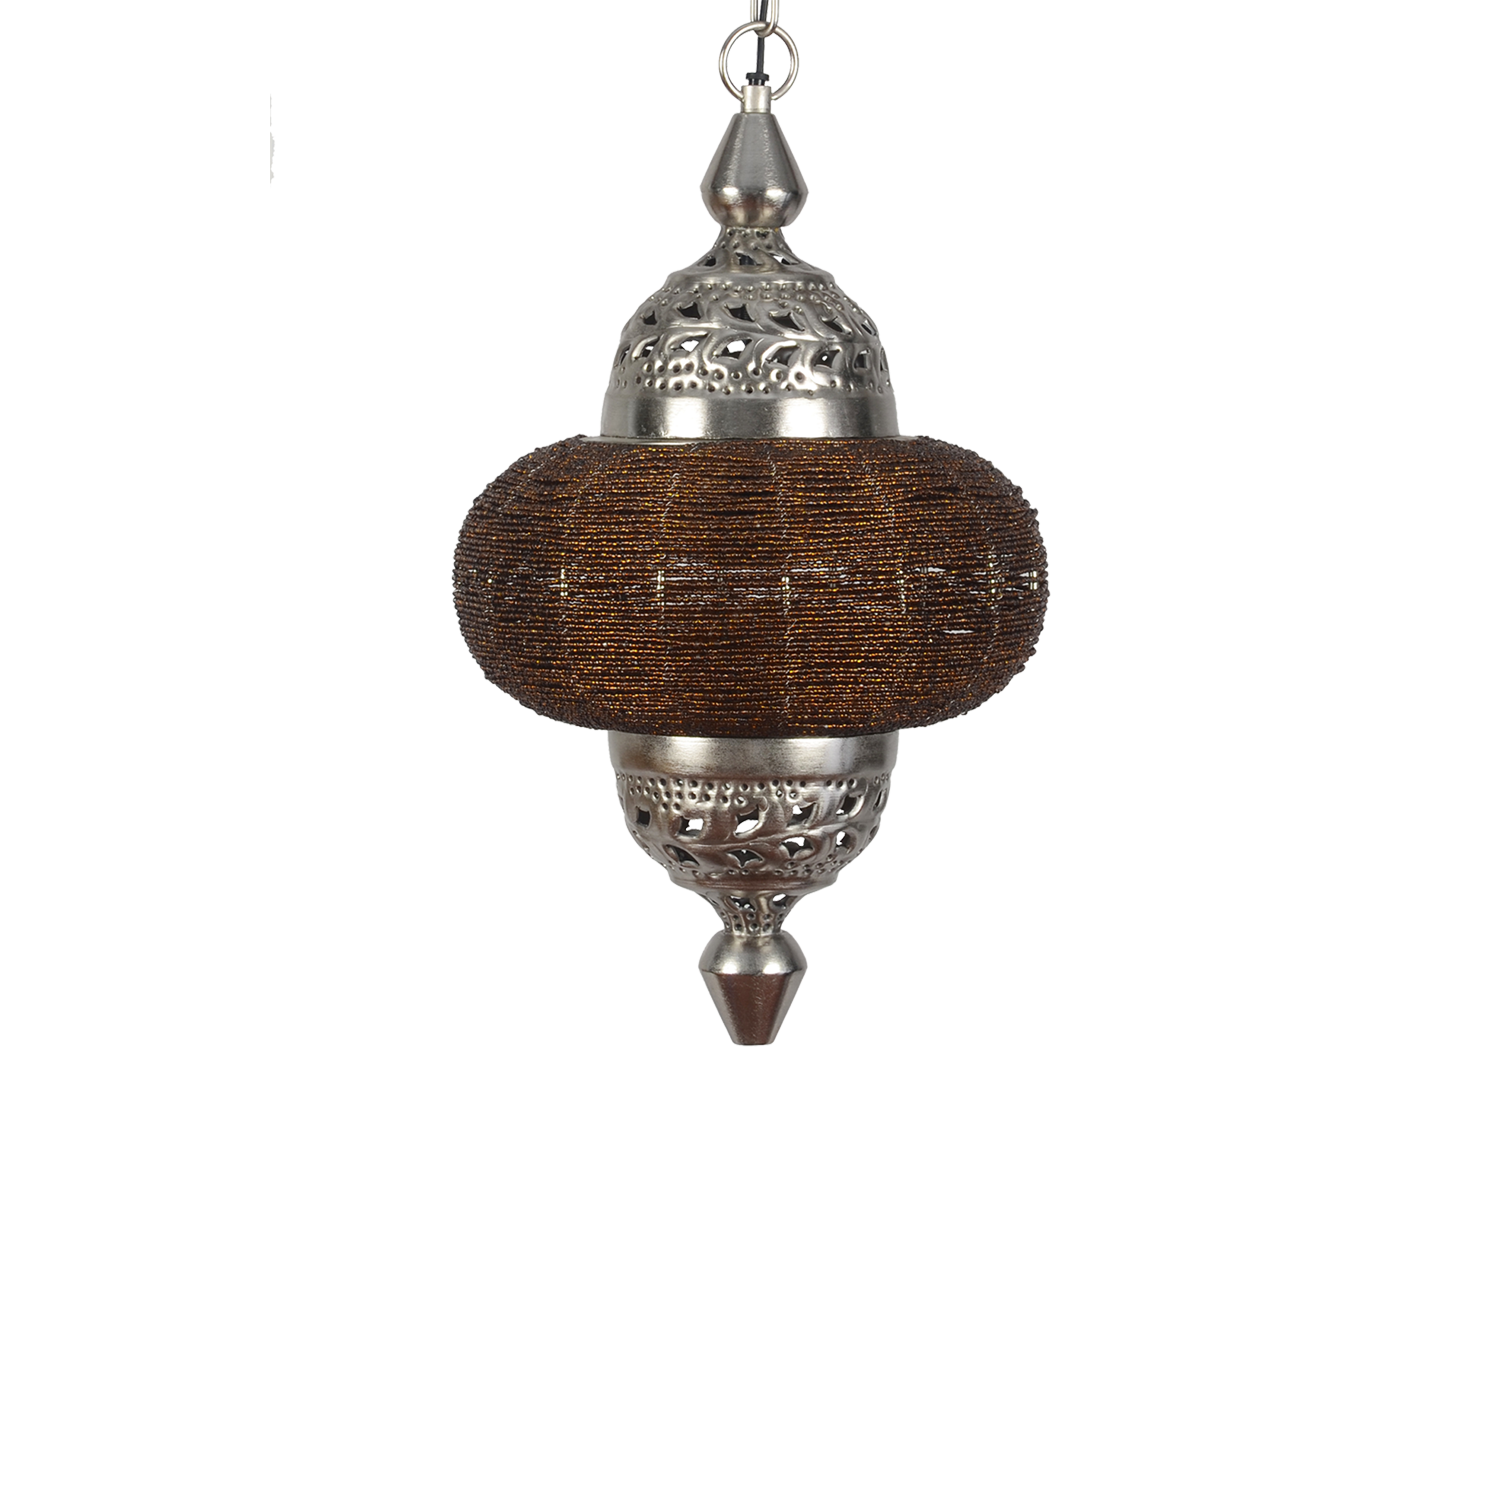 Hanglamp Arabesque klein donkerbruin